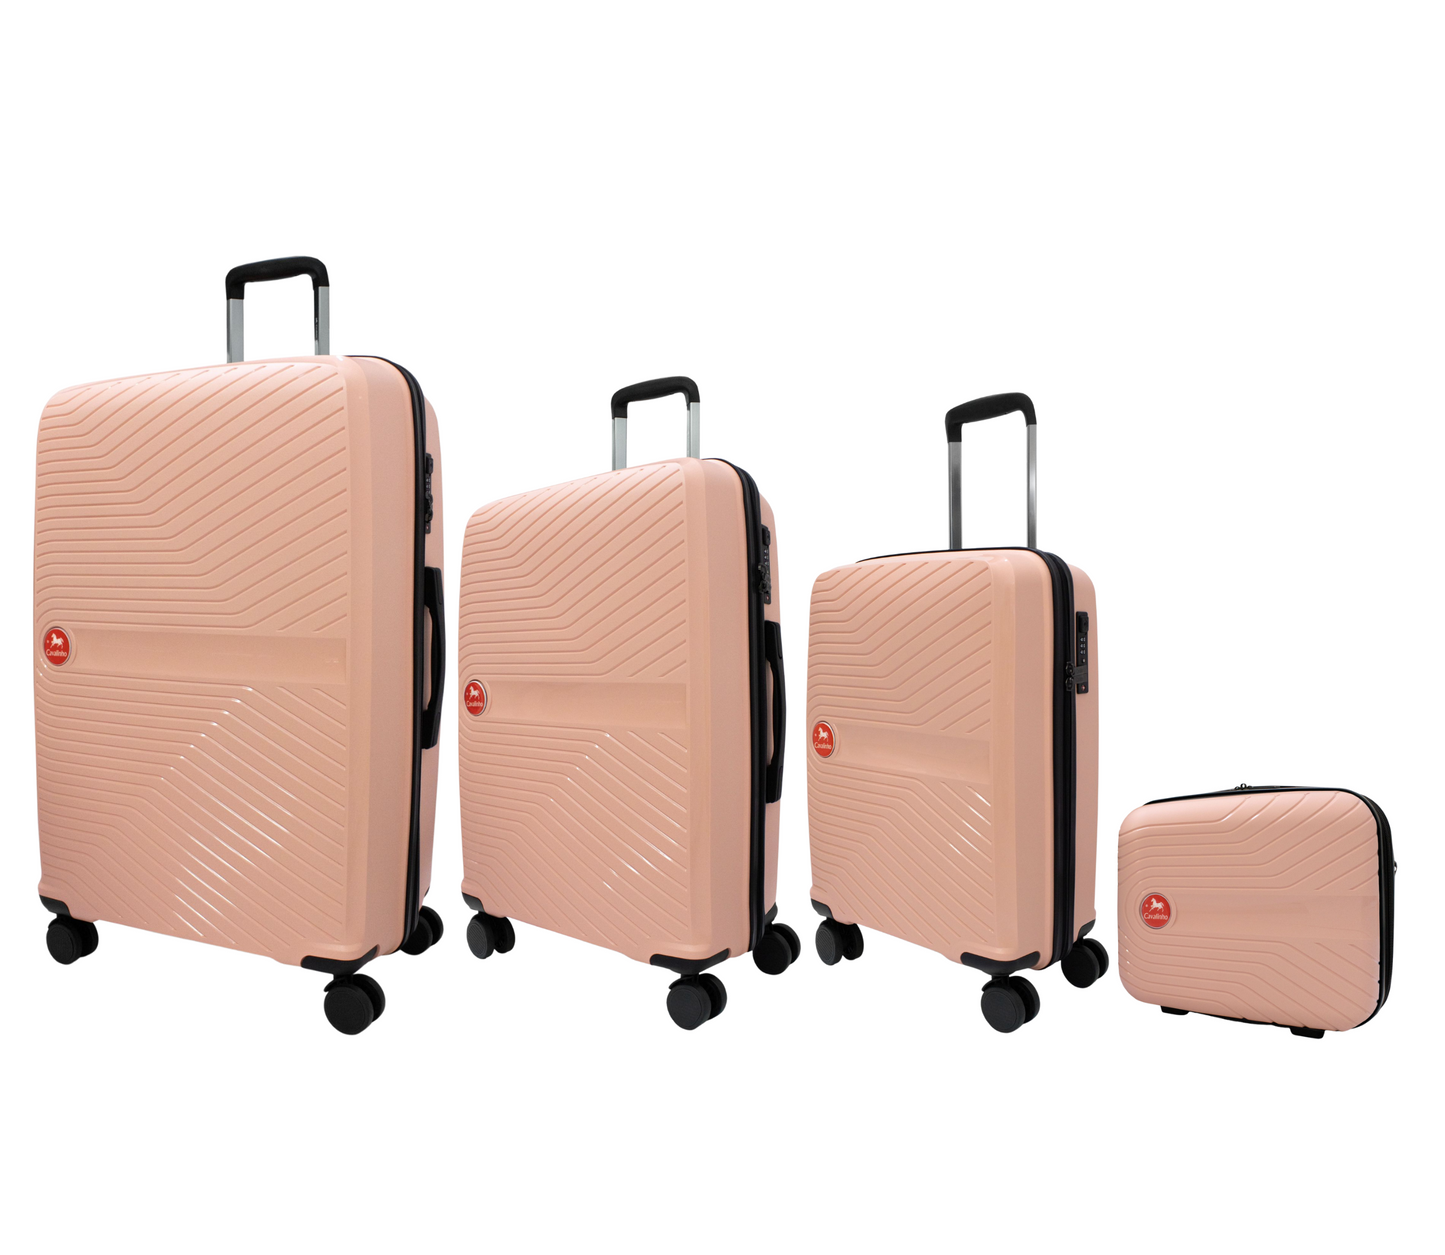 Cavalinho Canada & USA 4 Piece Set of Colorful Hardside Luggage (15", 19", 24", 28") - Salmon - 68020004.11.S4_2